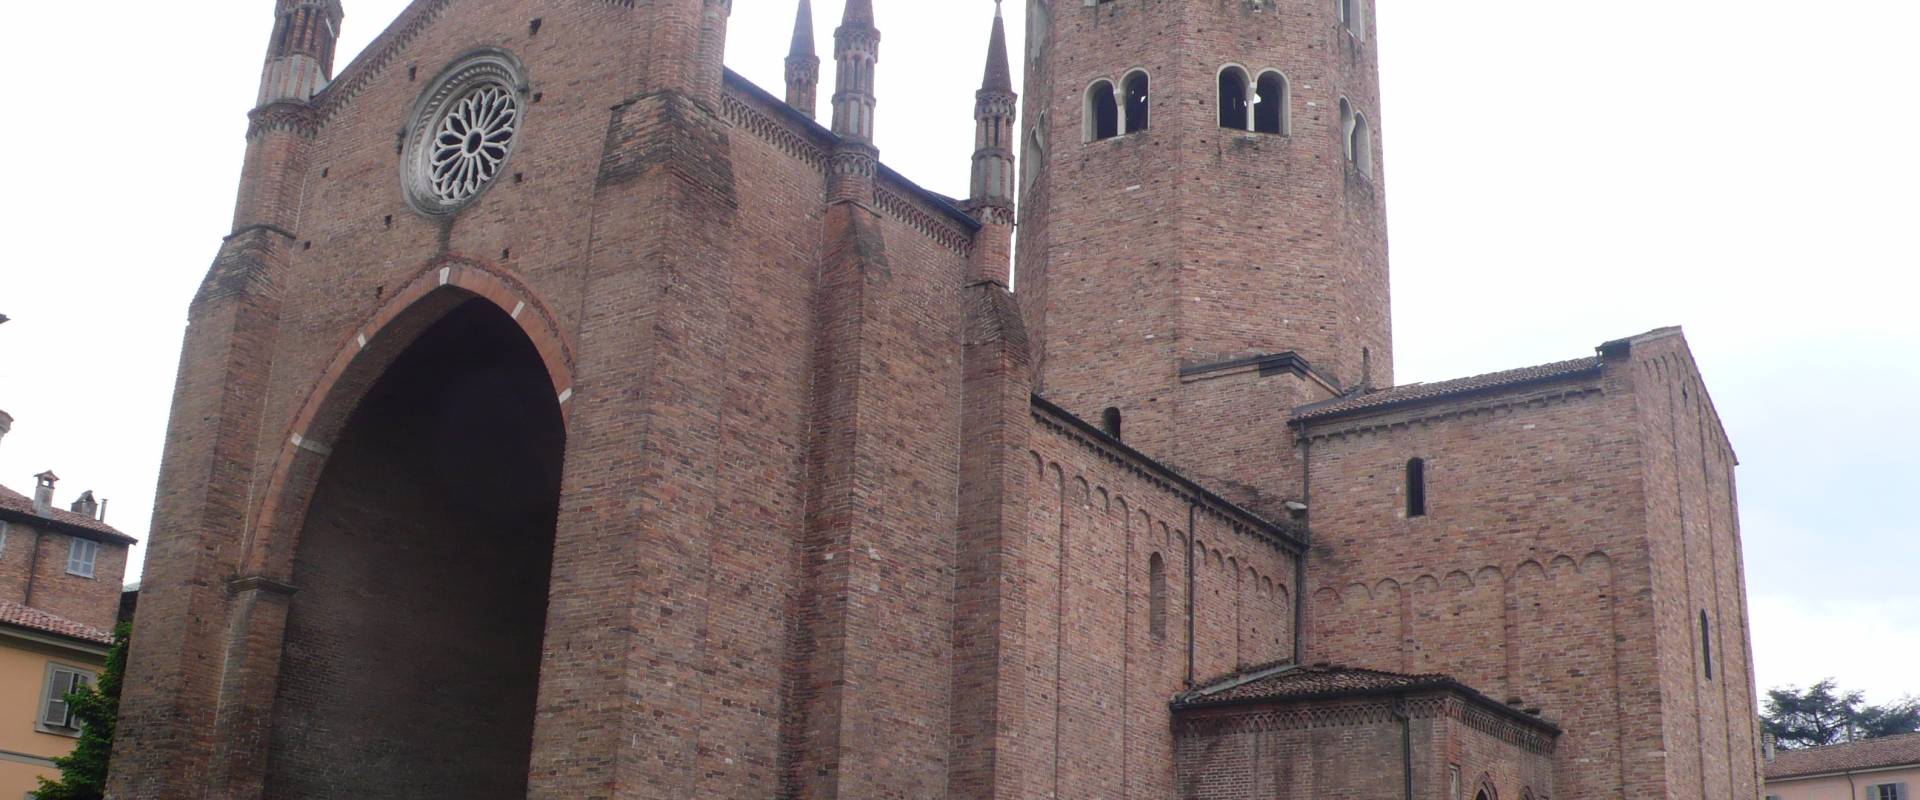 Basilica di Sant'Antonino 1 - Piacenza photo by RatMan1234